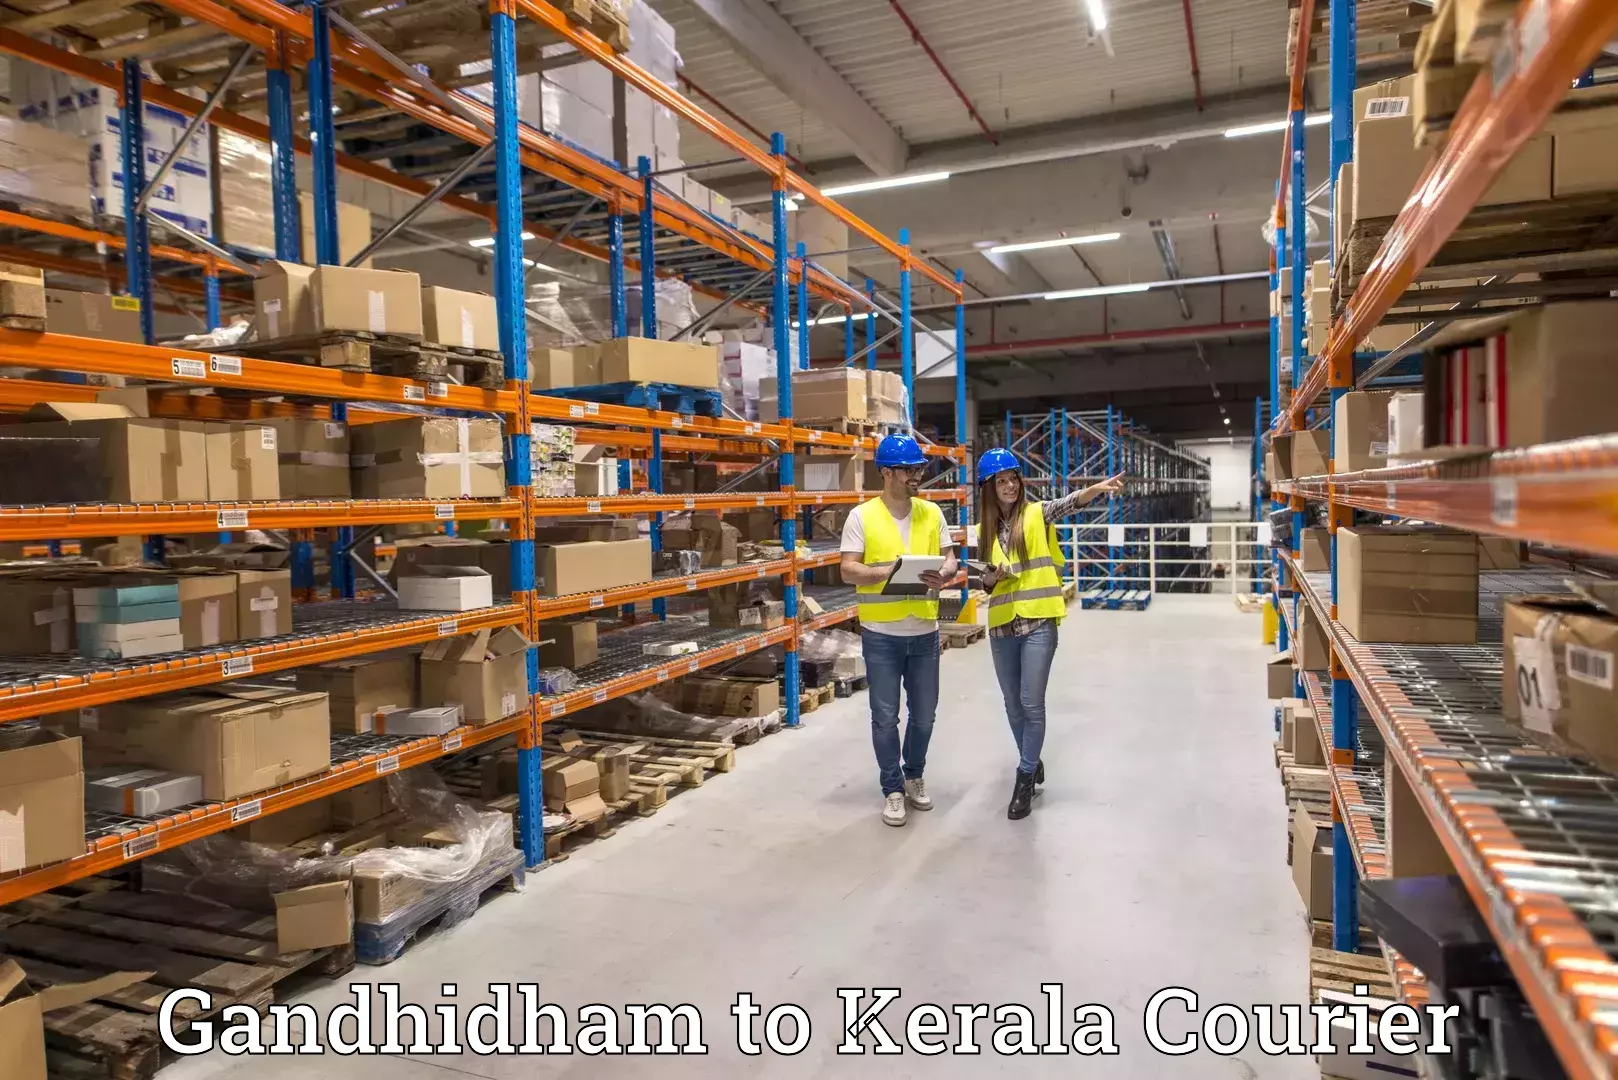 Digital courier platforms Gandhidham to Ernakulam